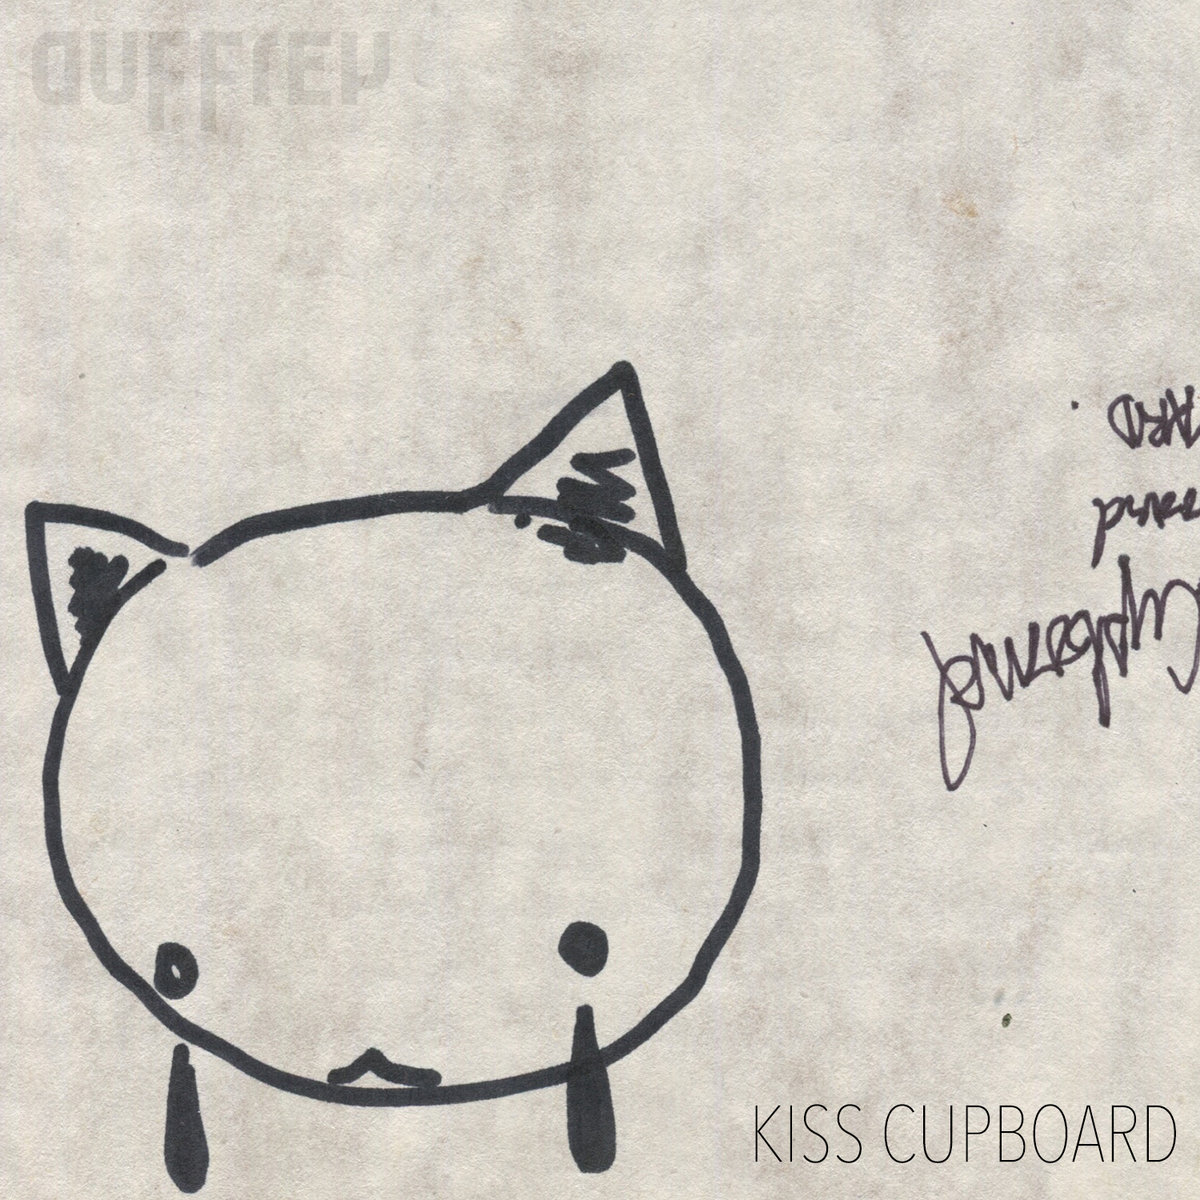 Duffrey - Moist @ 'Kiss Cupboard' album (bass, electronic)